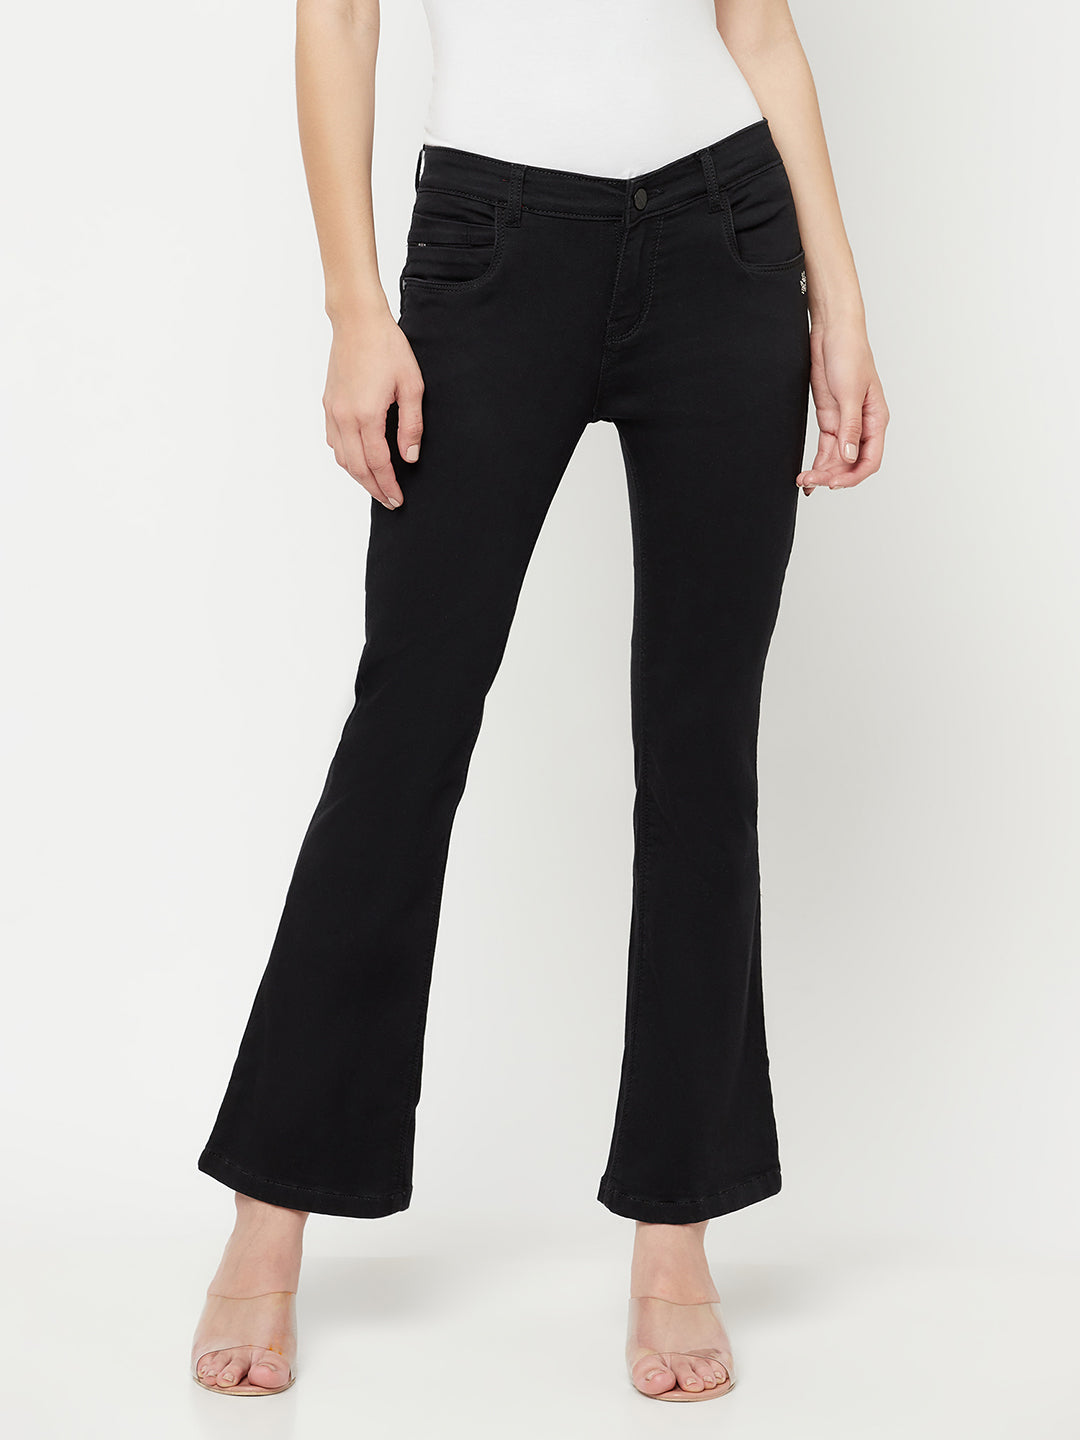 Black Bootcut Jeans - Women Jeans